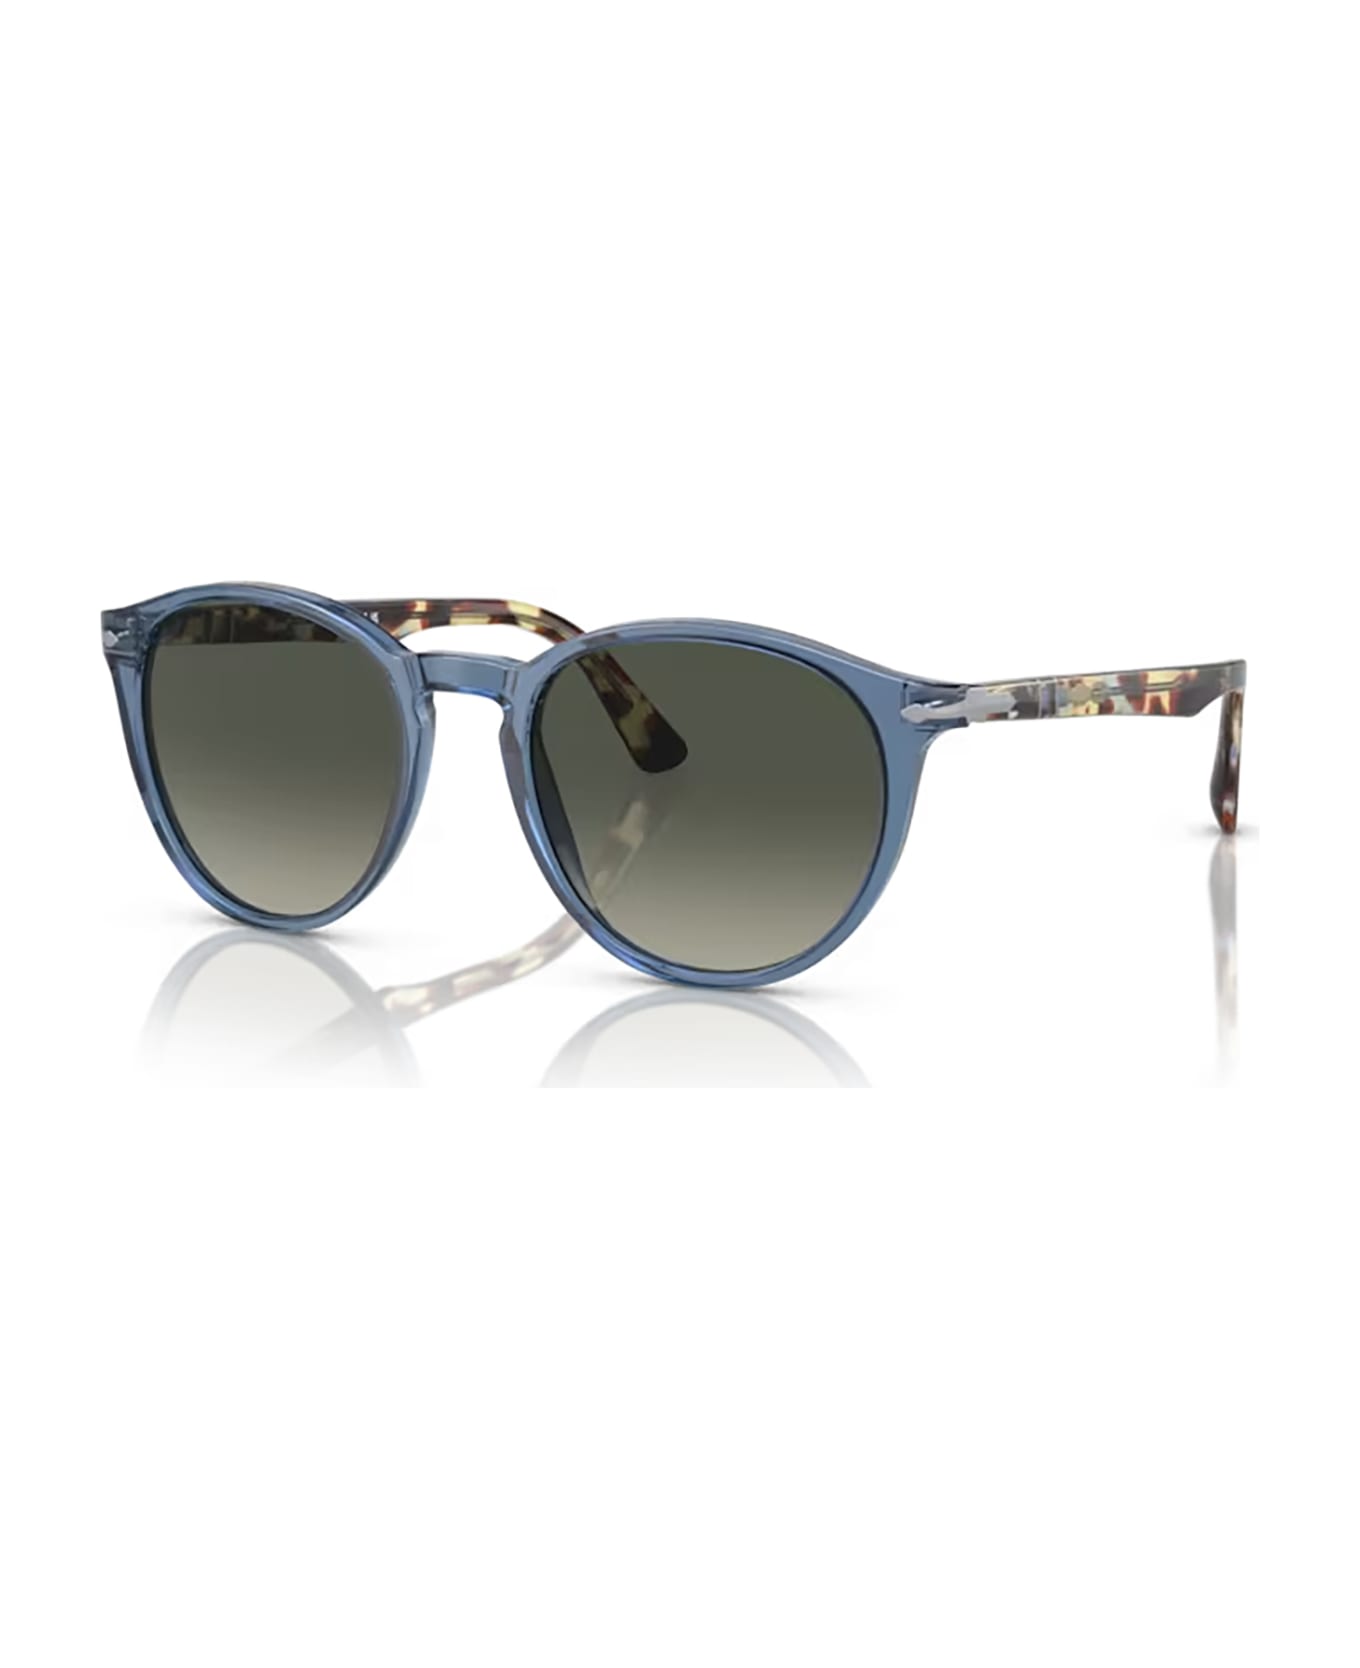 Persol Po3152s Transparent Navy Sunglasses - Transparent Navy